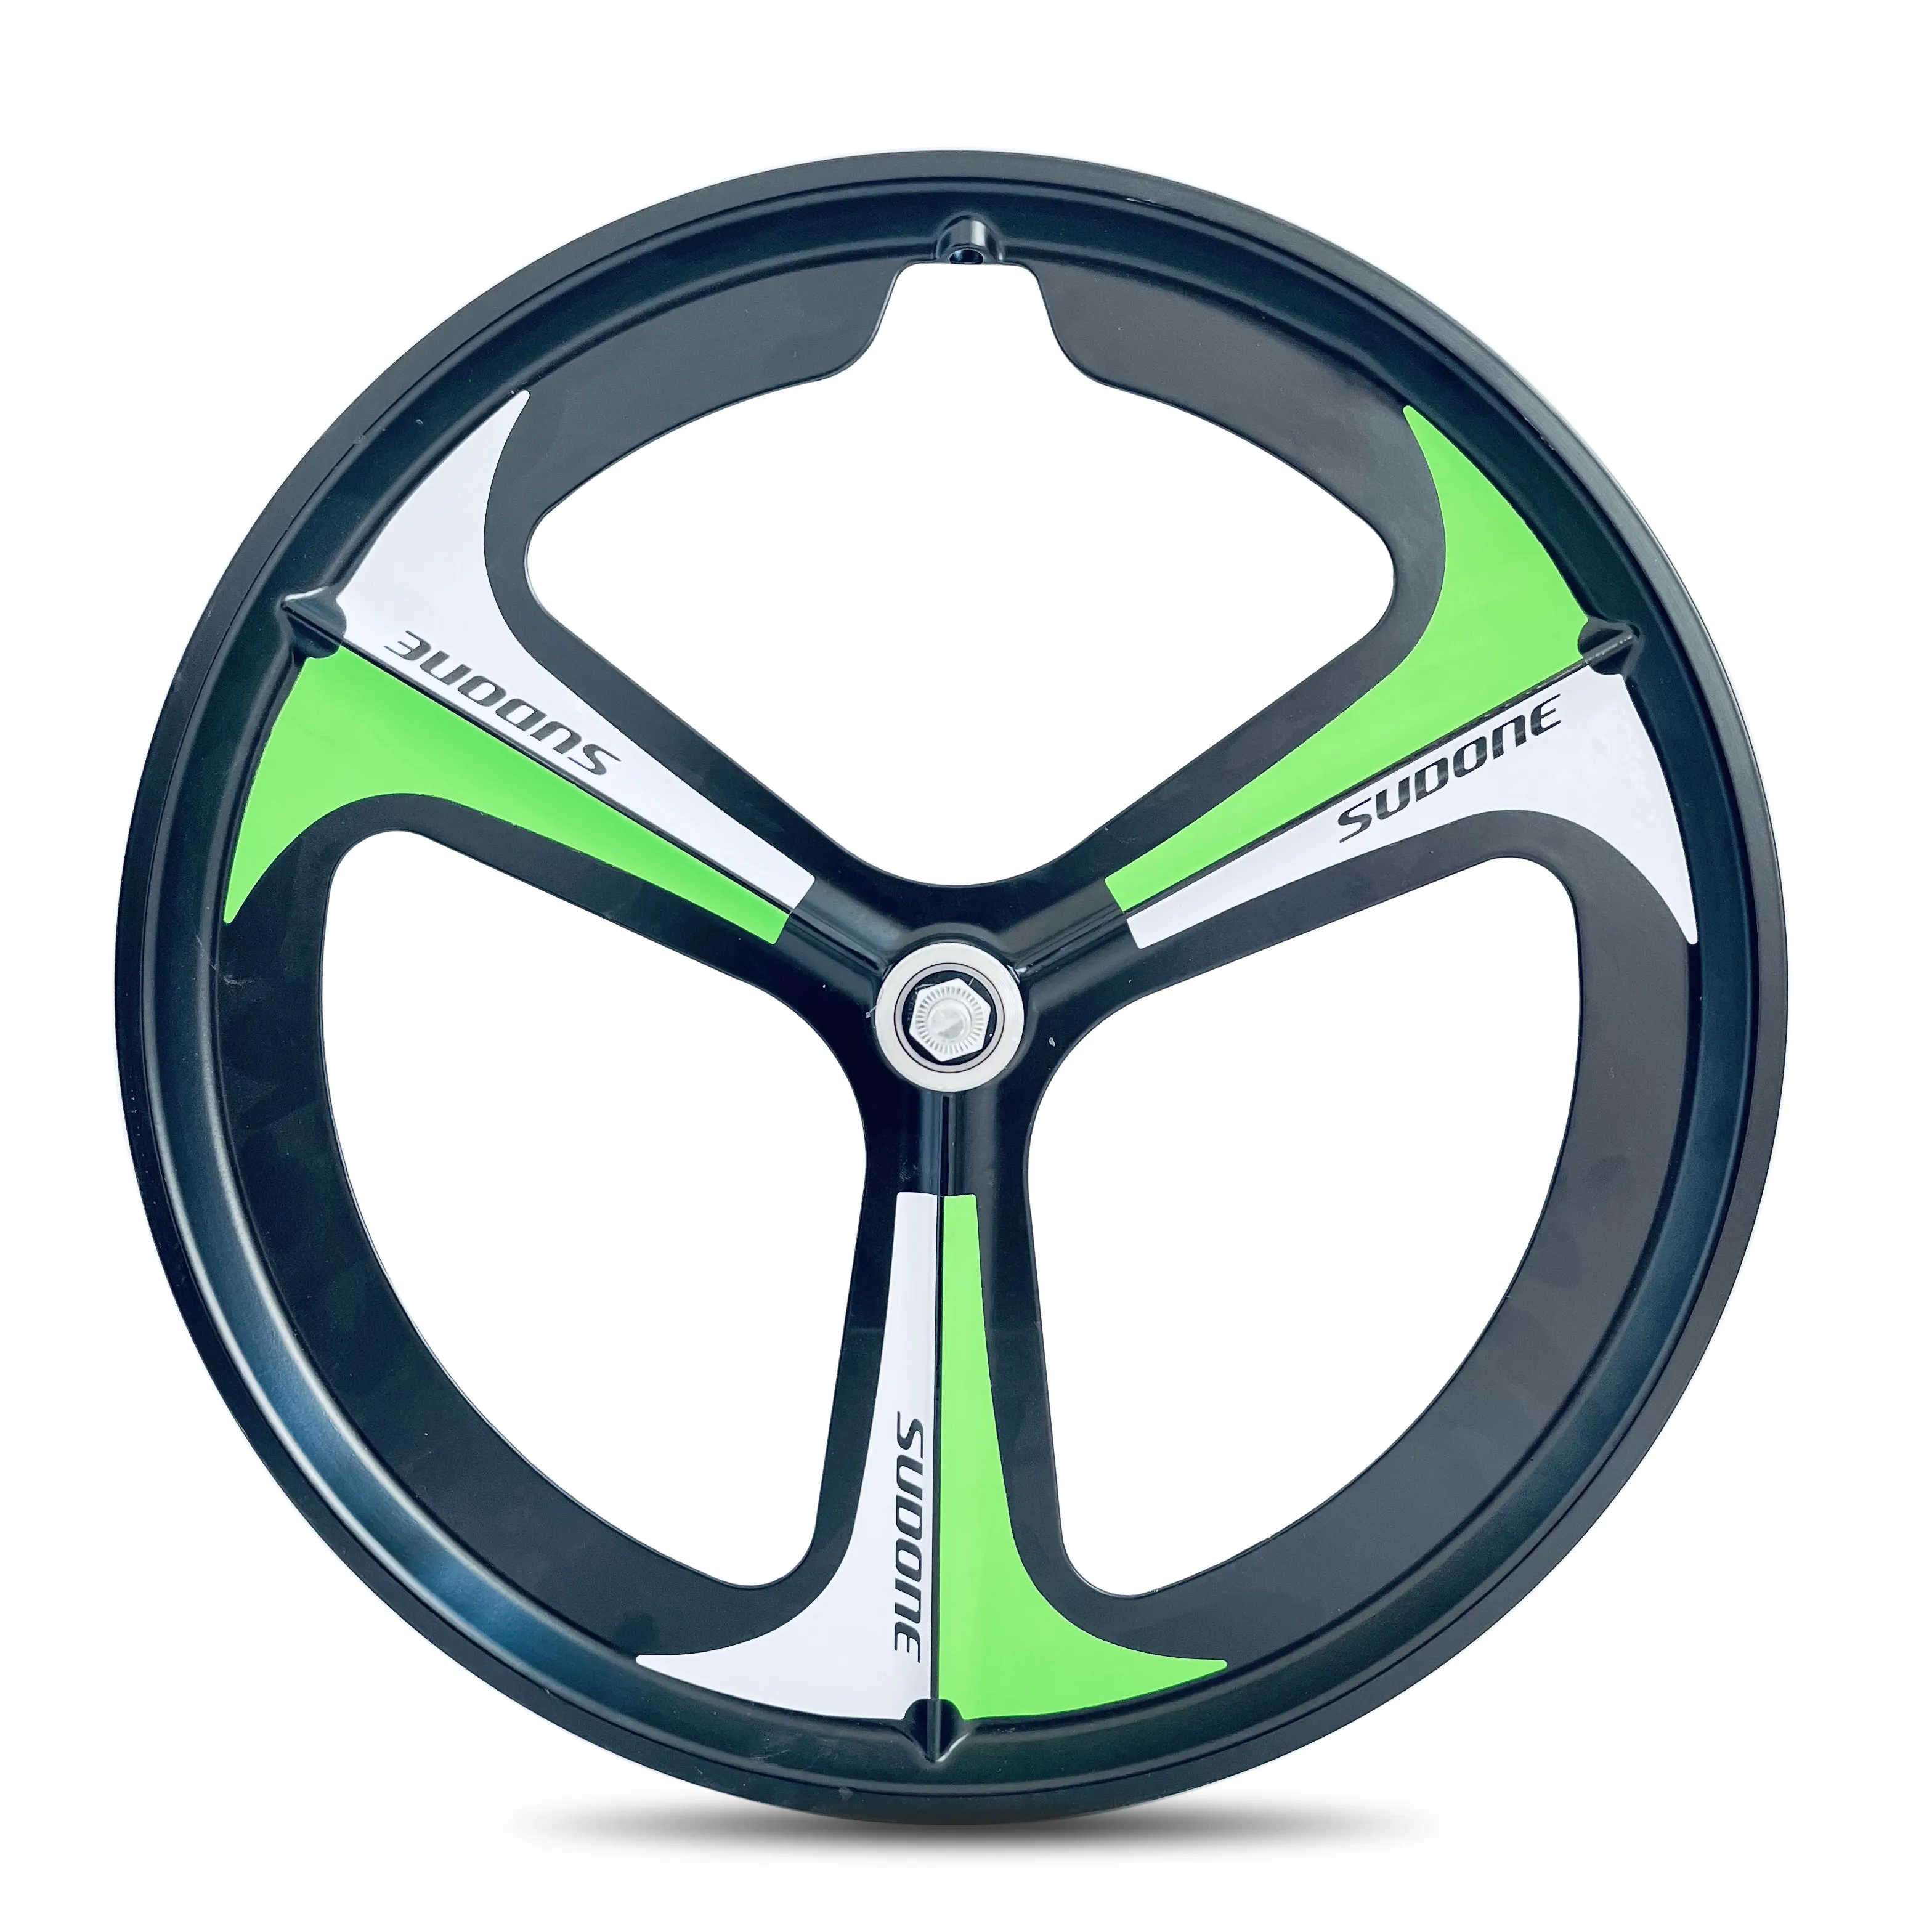 High Quality Tubeless Bicycle Wheel with Rim Bike Wheel Premium Accessory